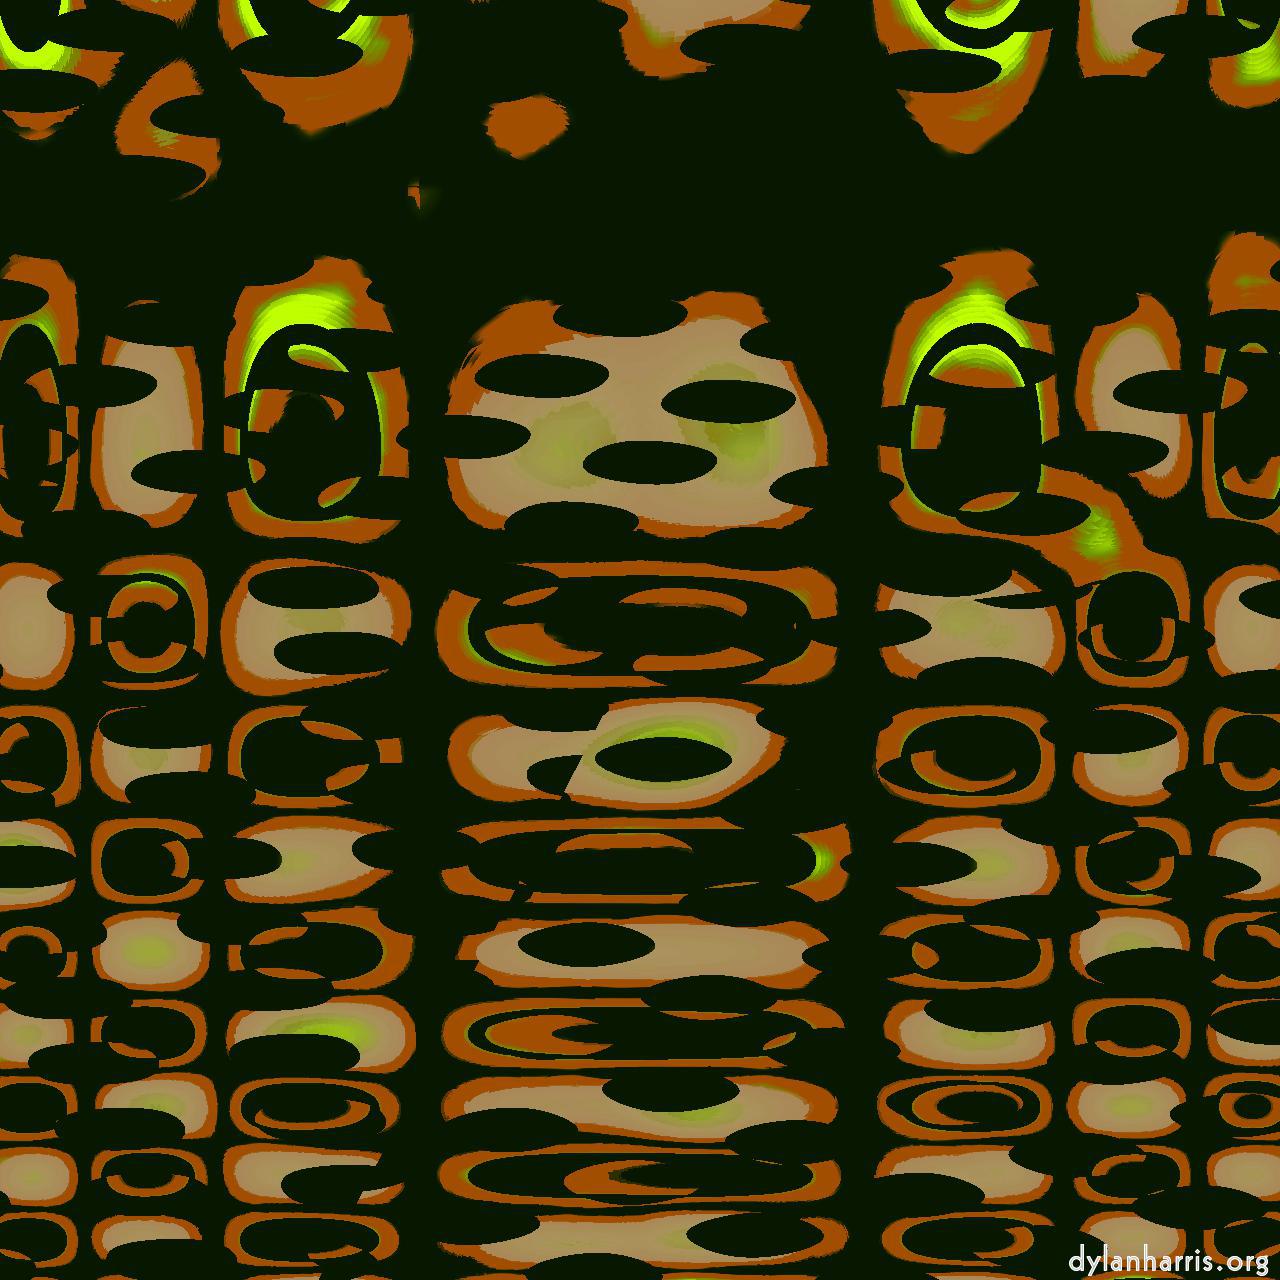 image: pattern 1 :: vert grid